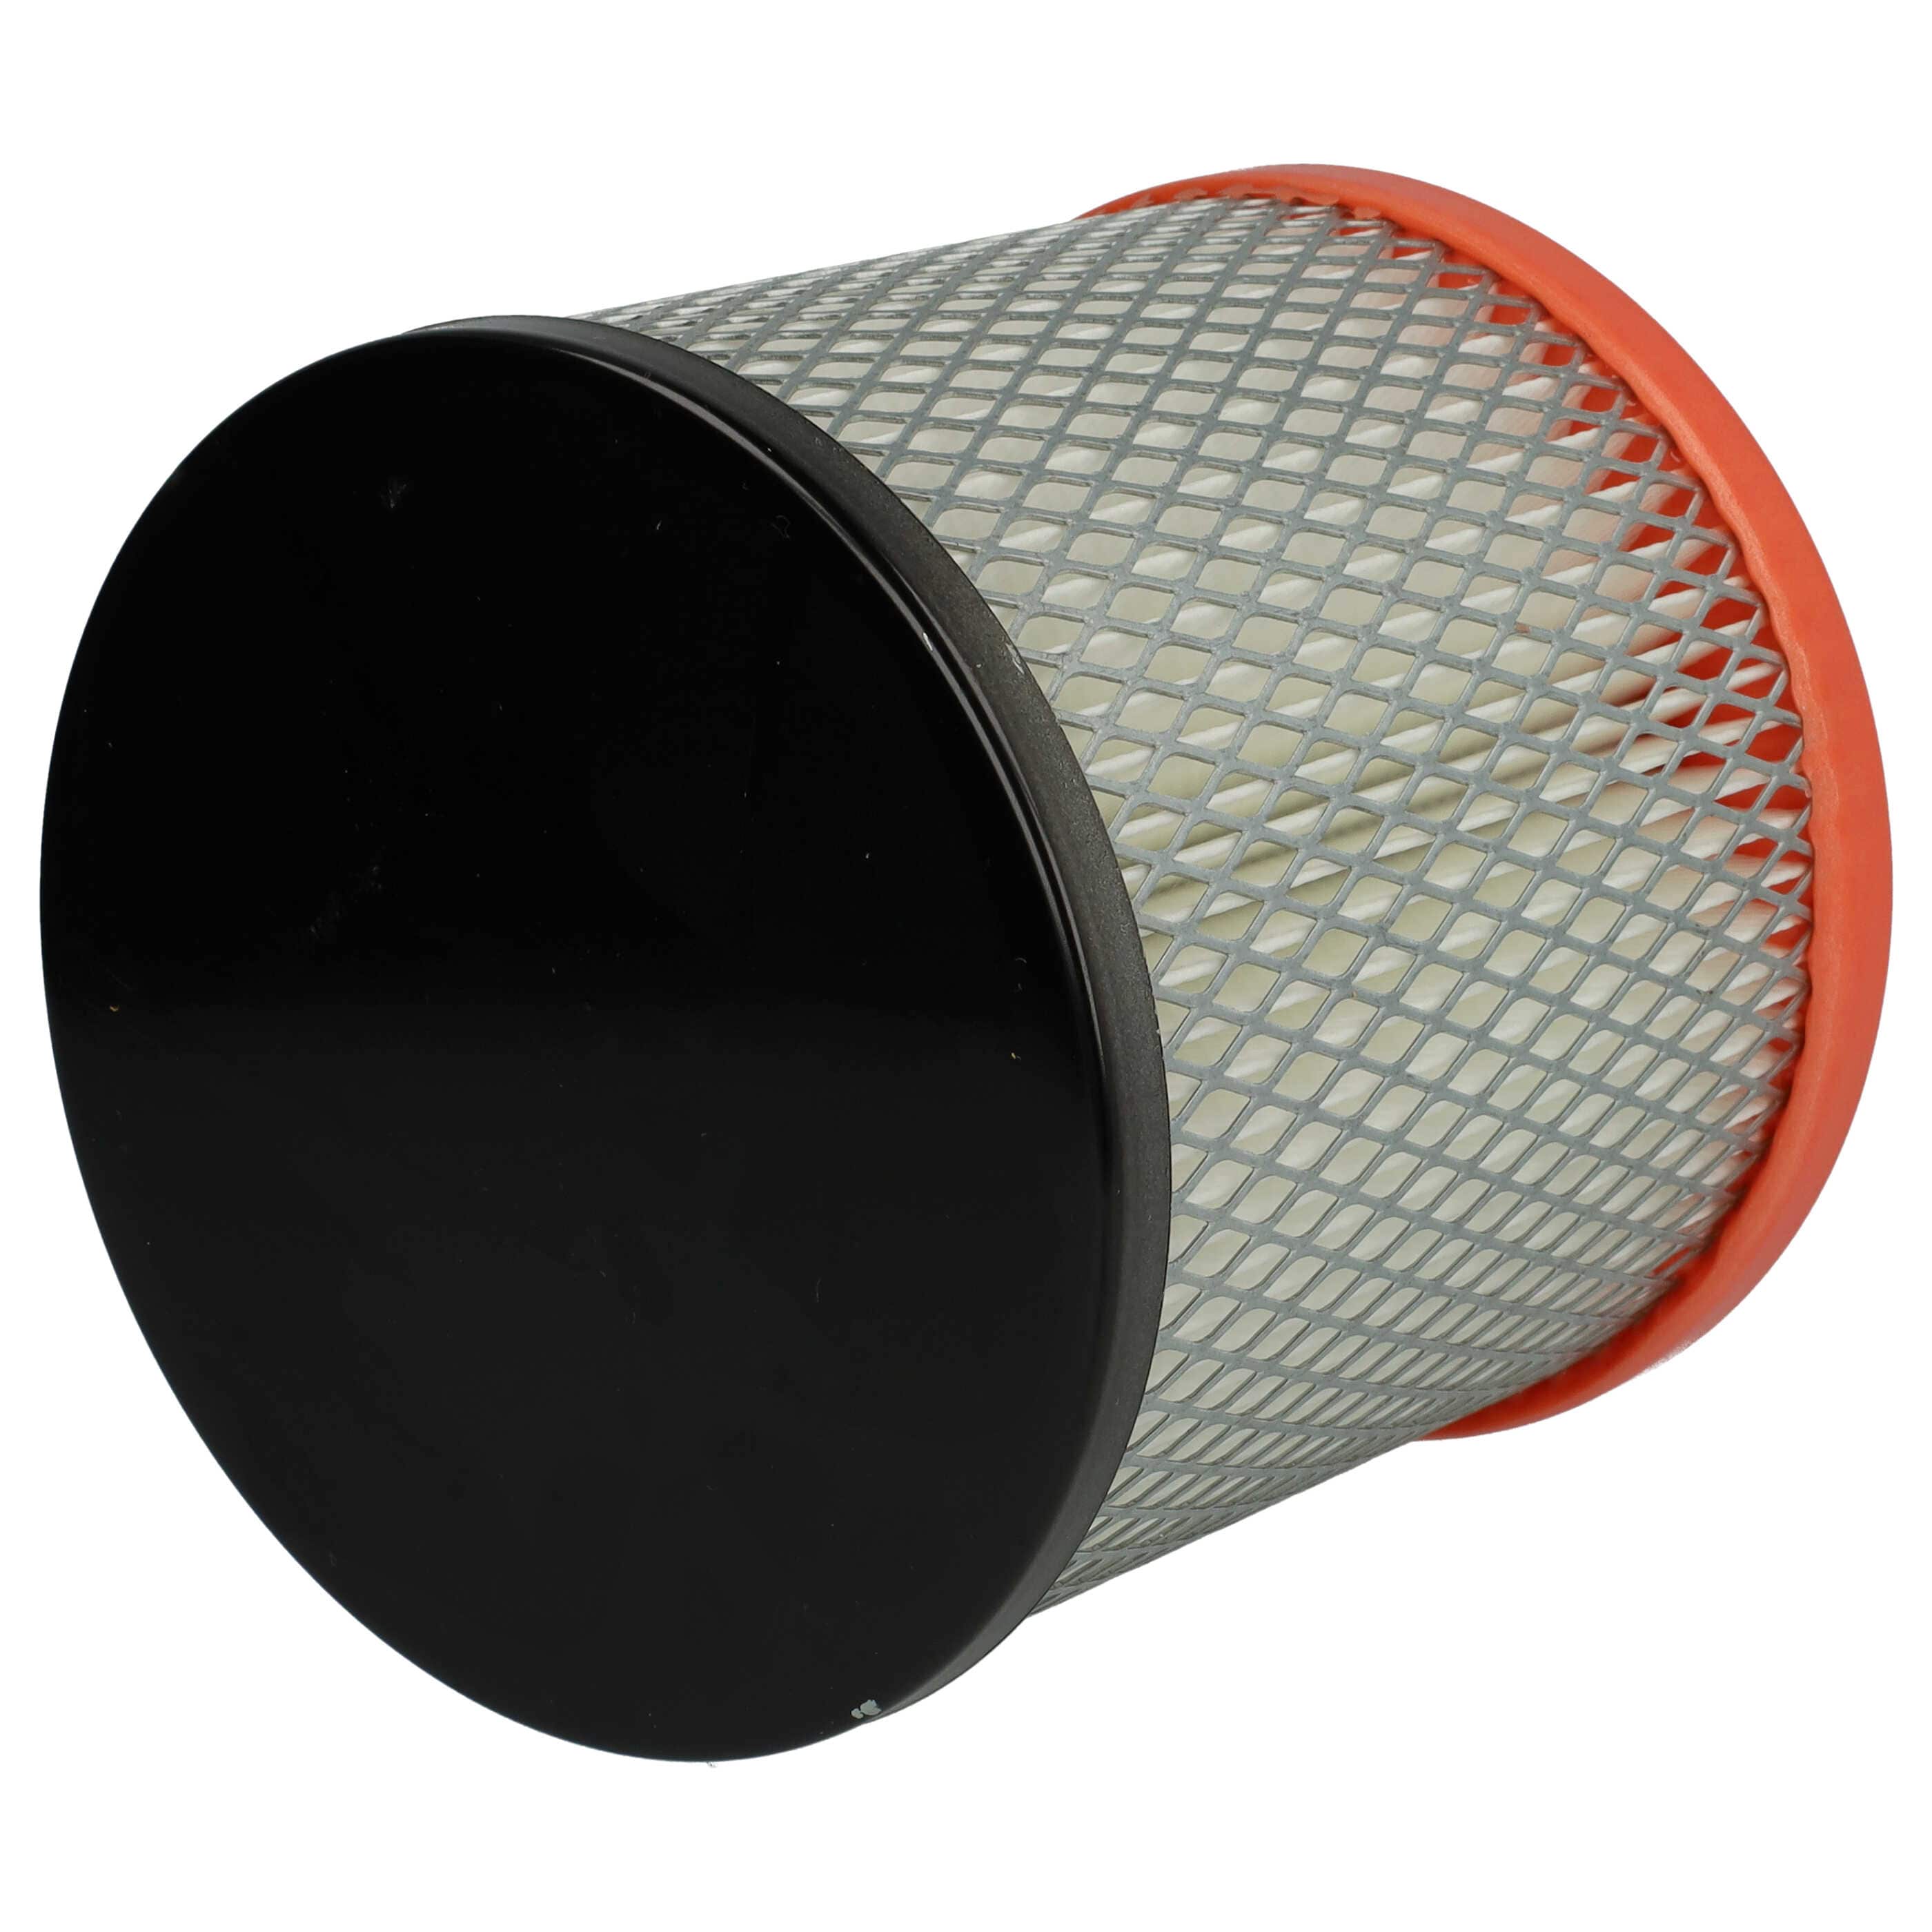 Filtro reemplaza Güde 16731 para aspiradora chimeneas filtro de cartucho, negro / naranja / blanco / gris